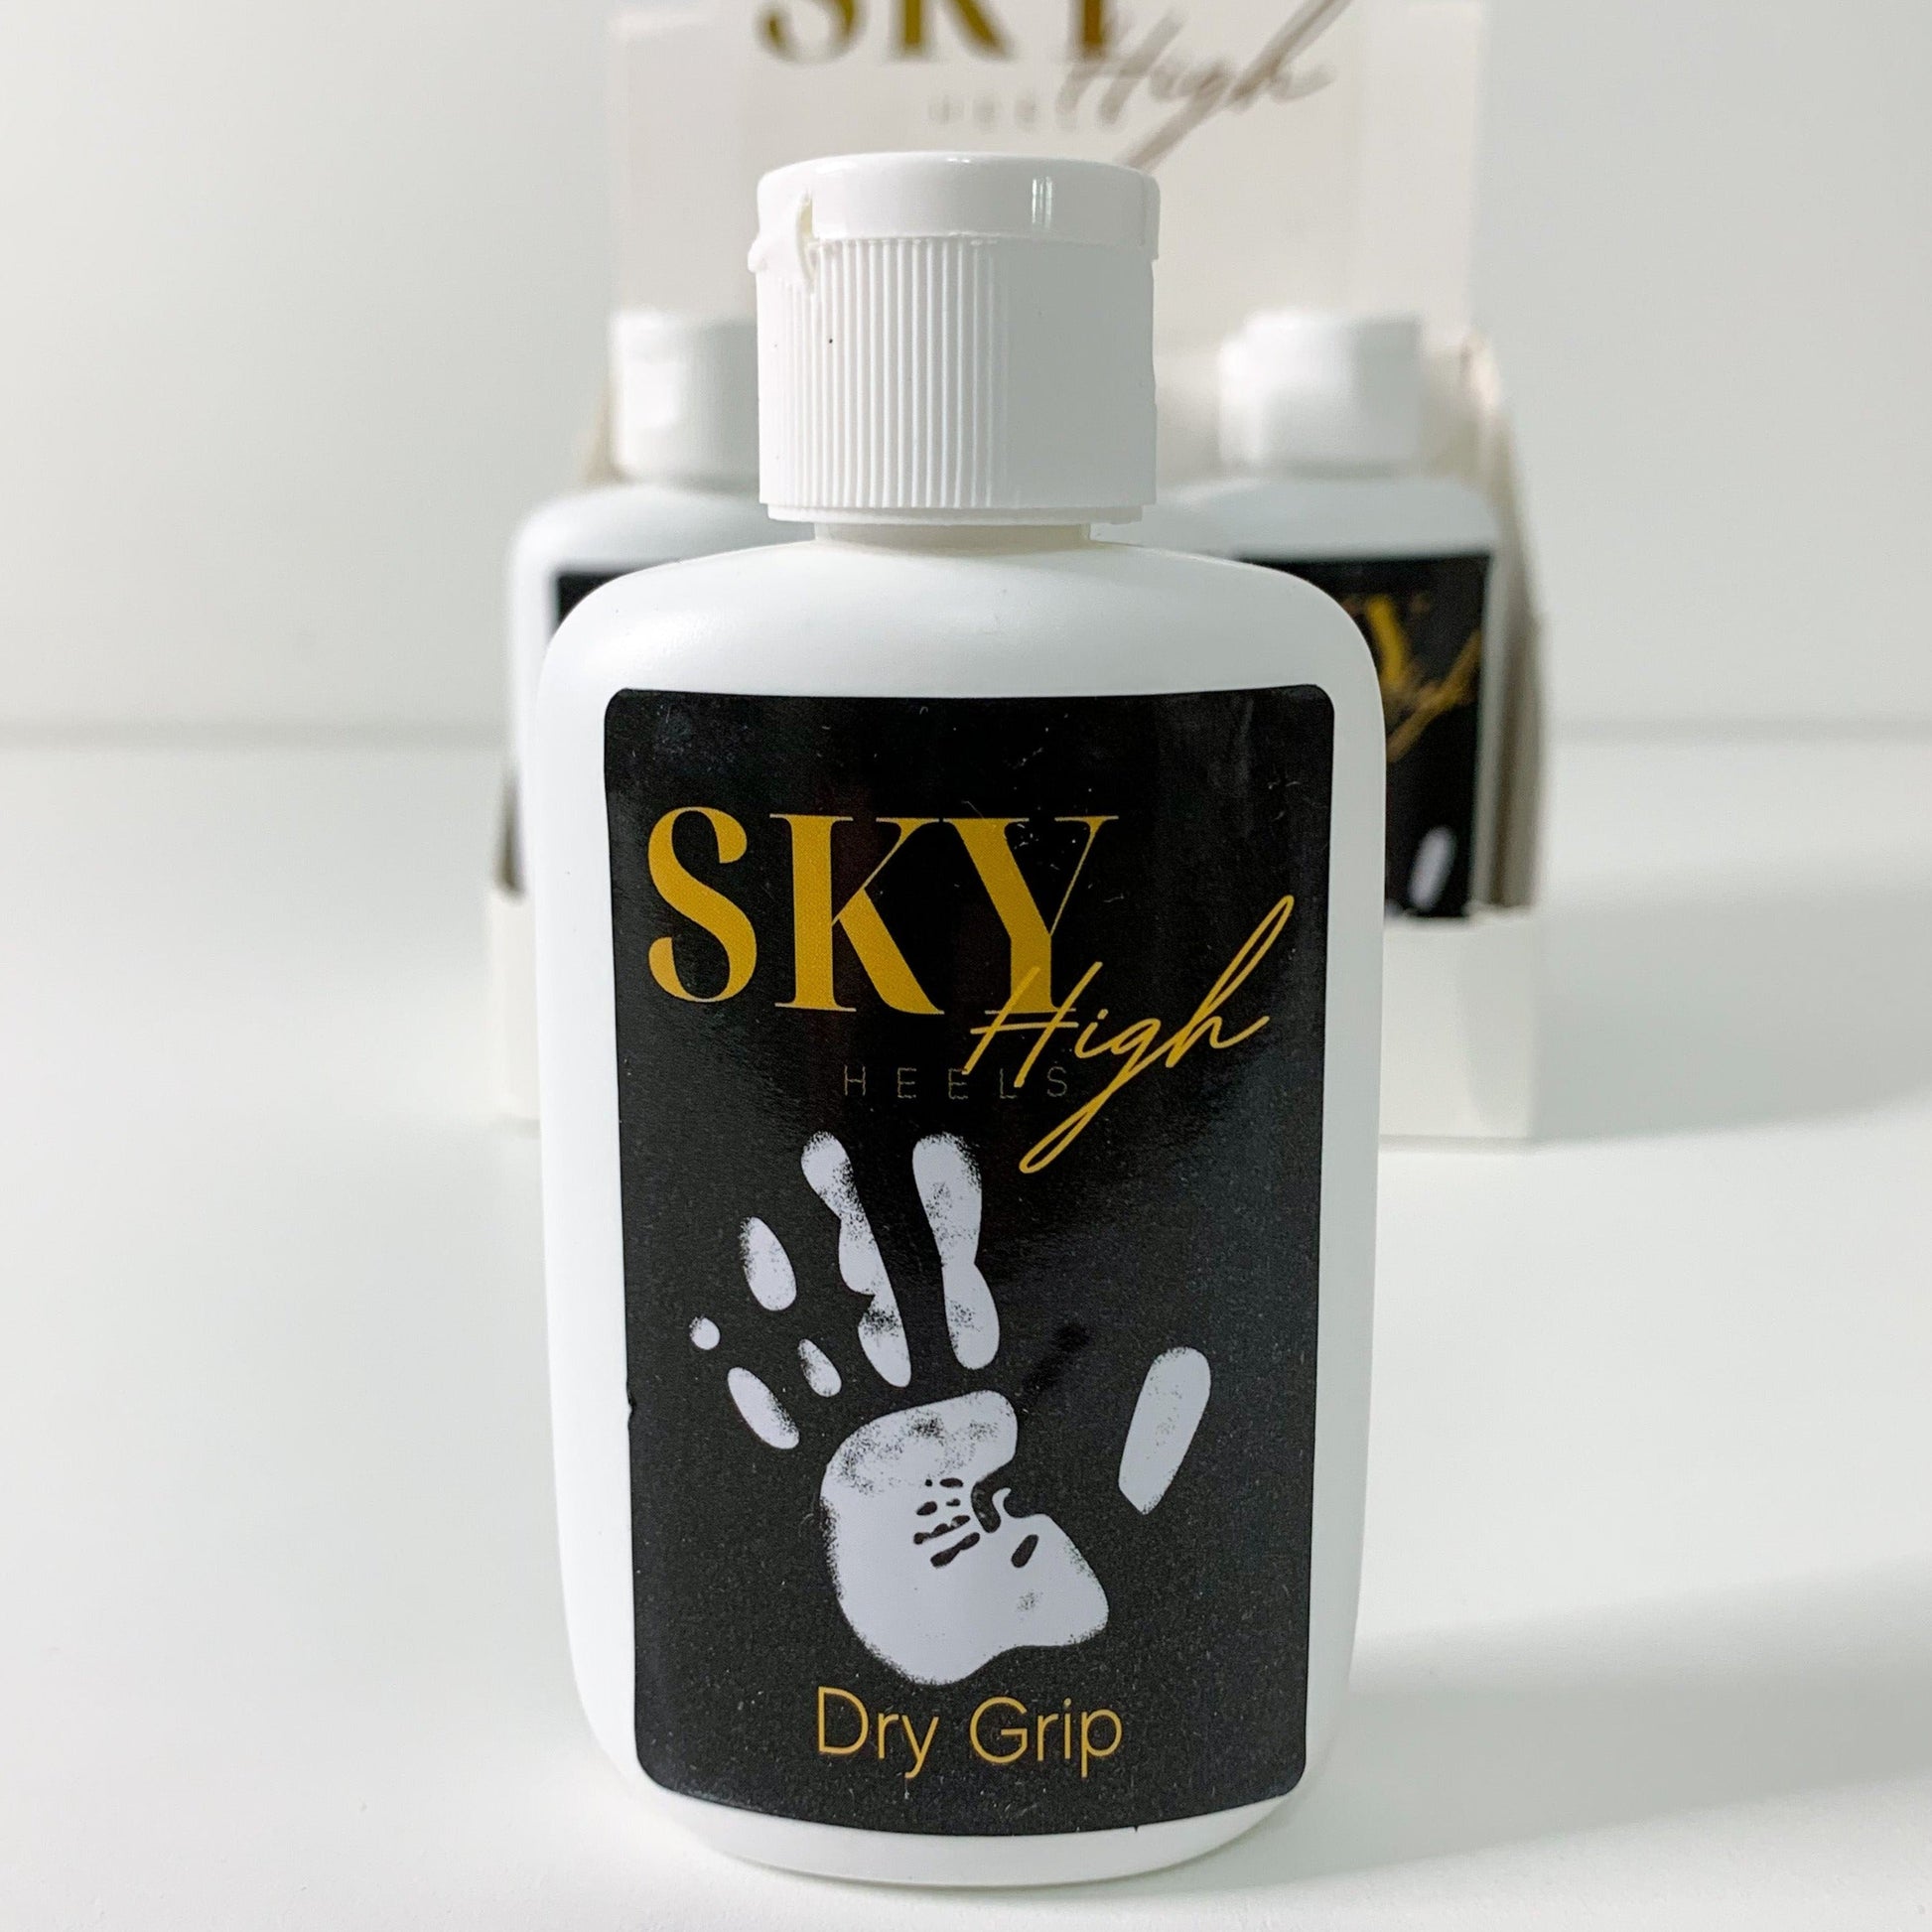 OG Dry Grip - Sky High Heels Australia